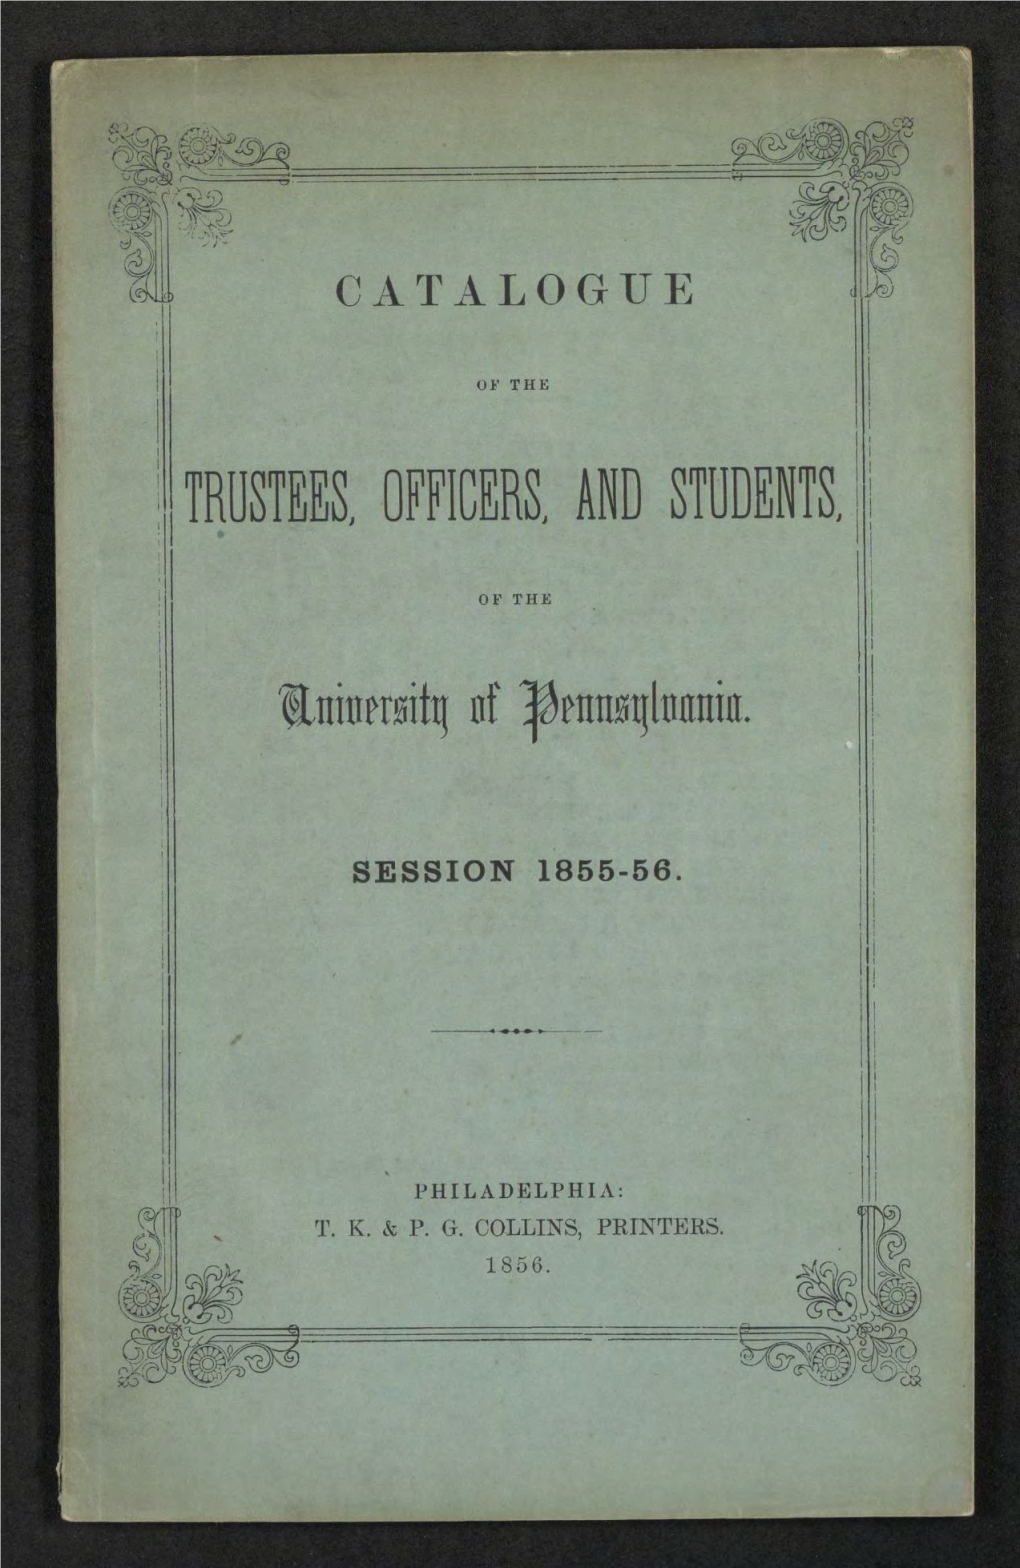 University of Pennsylvania Catalogue, 1855-56